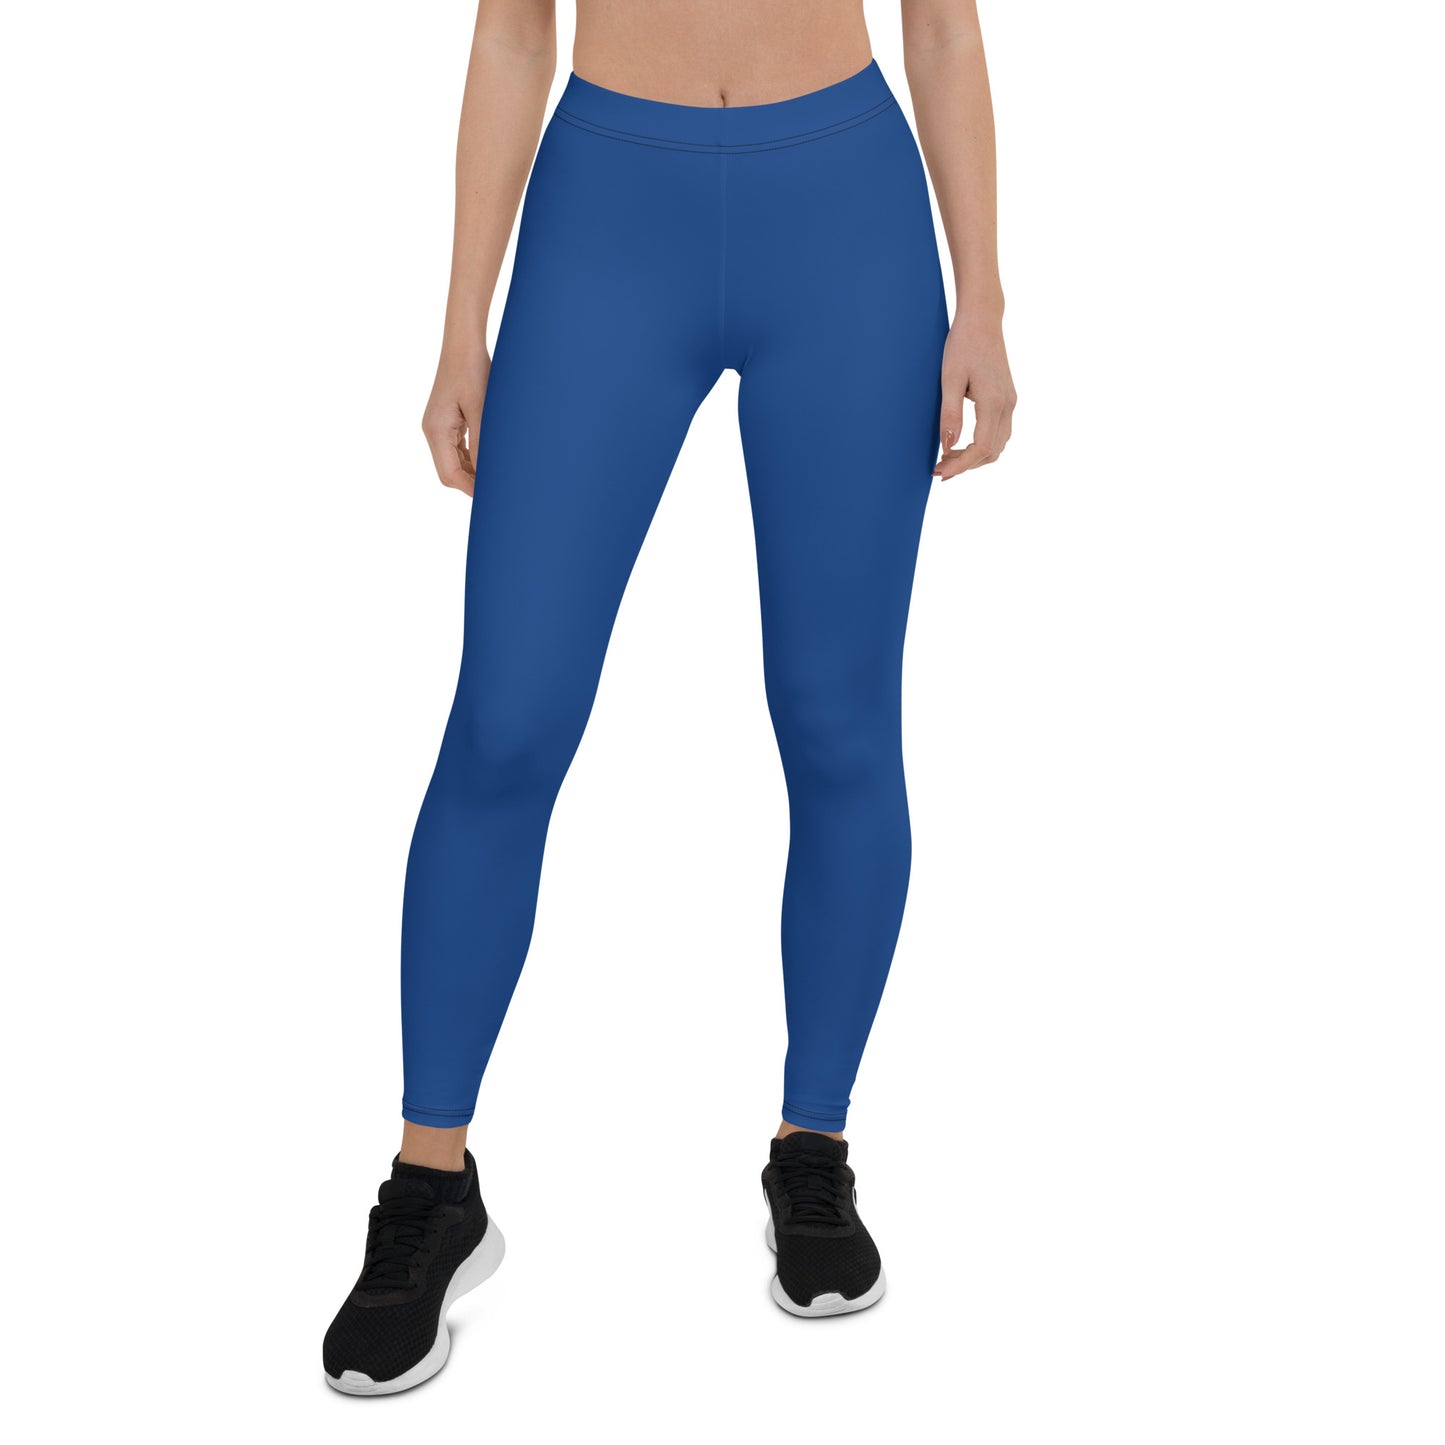 Humble Sportswear, women’s color match leggings, women’s spandex leggings, women’s gym leggings